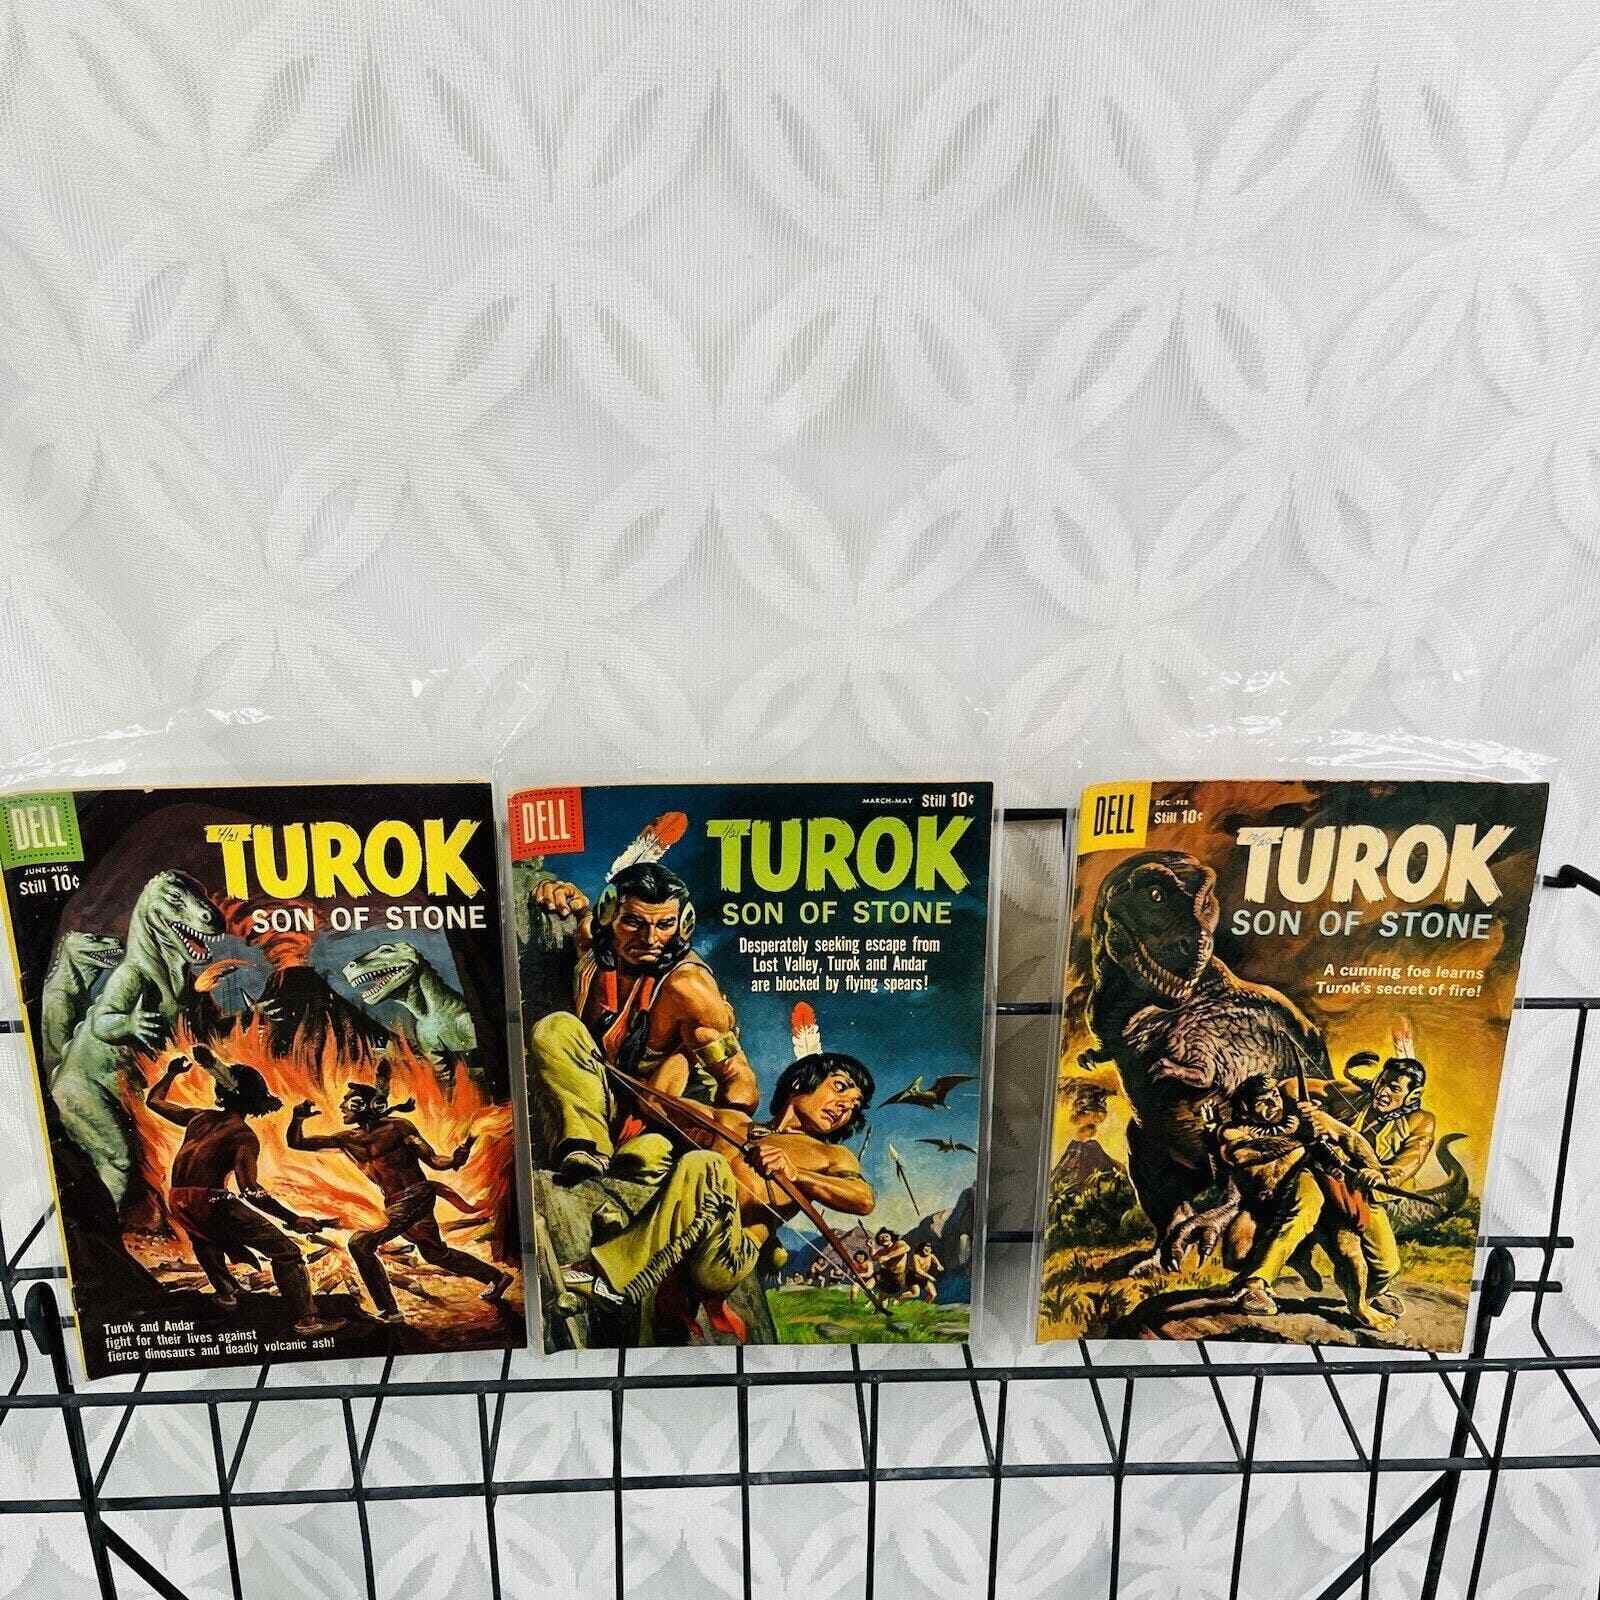 Turok Son of Stone 18-20 Dinosaur Cover (Dell 1960)